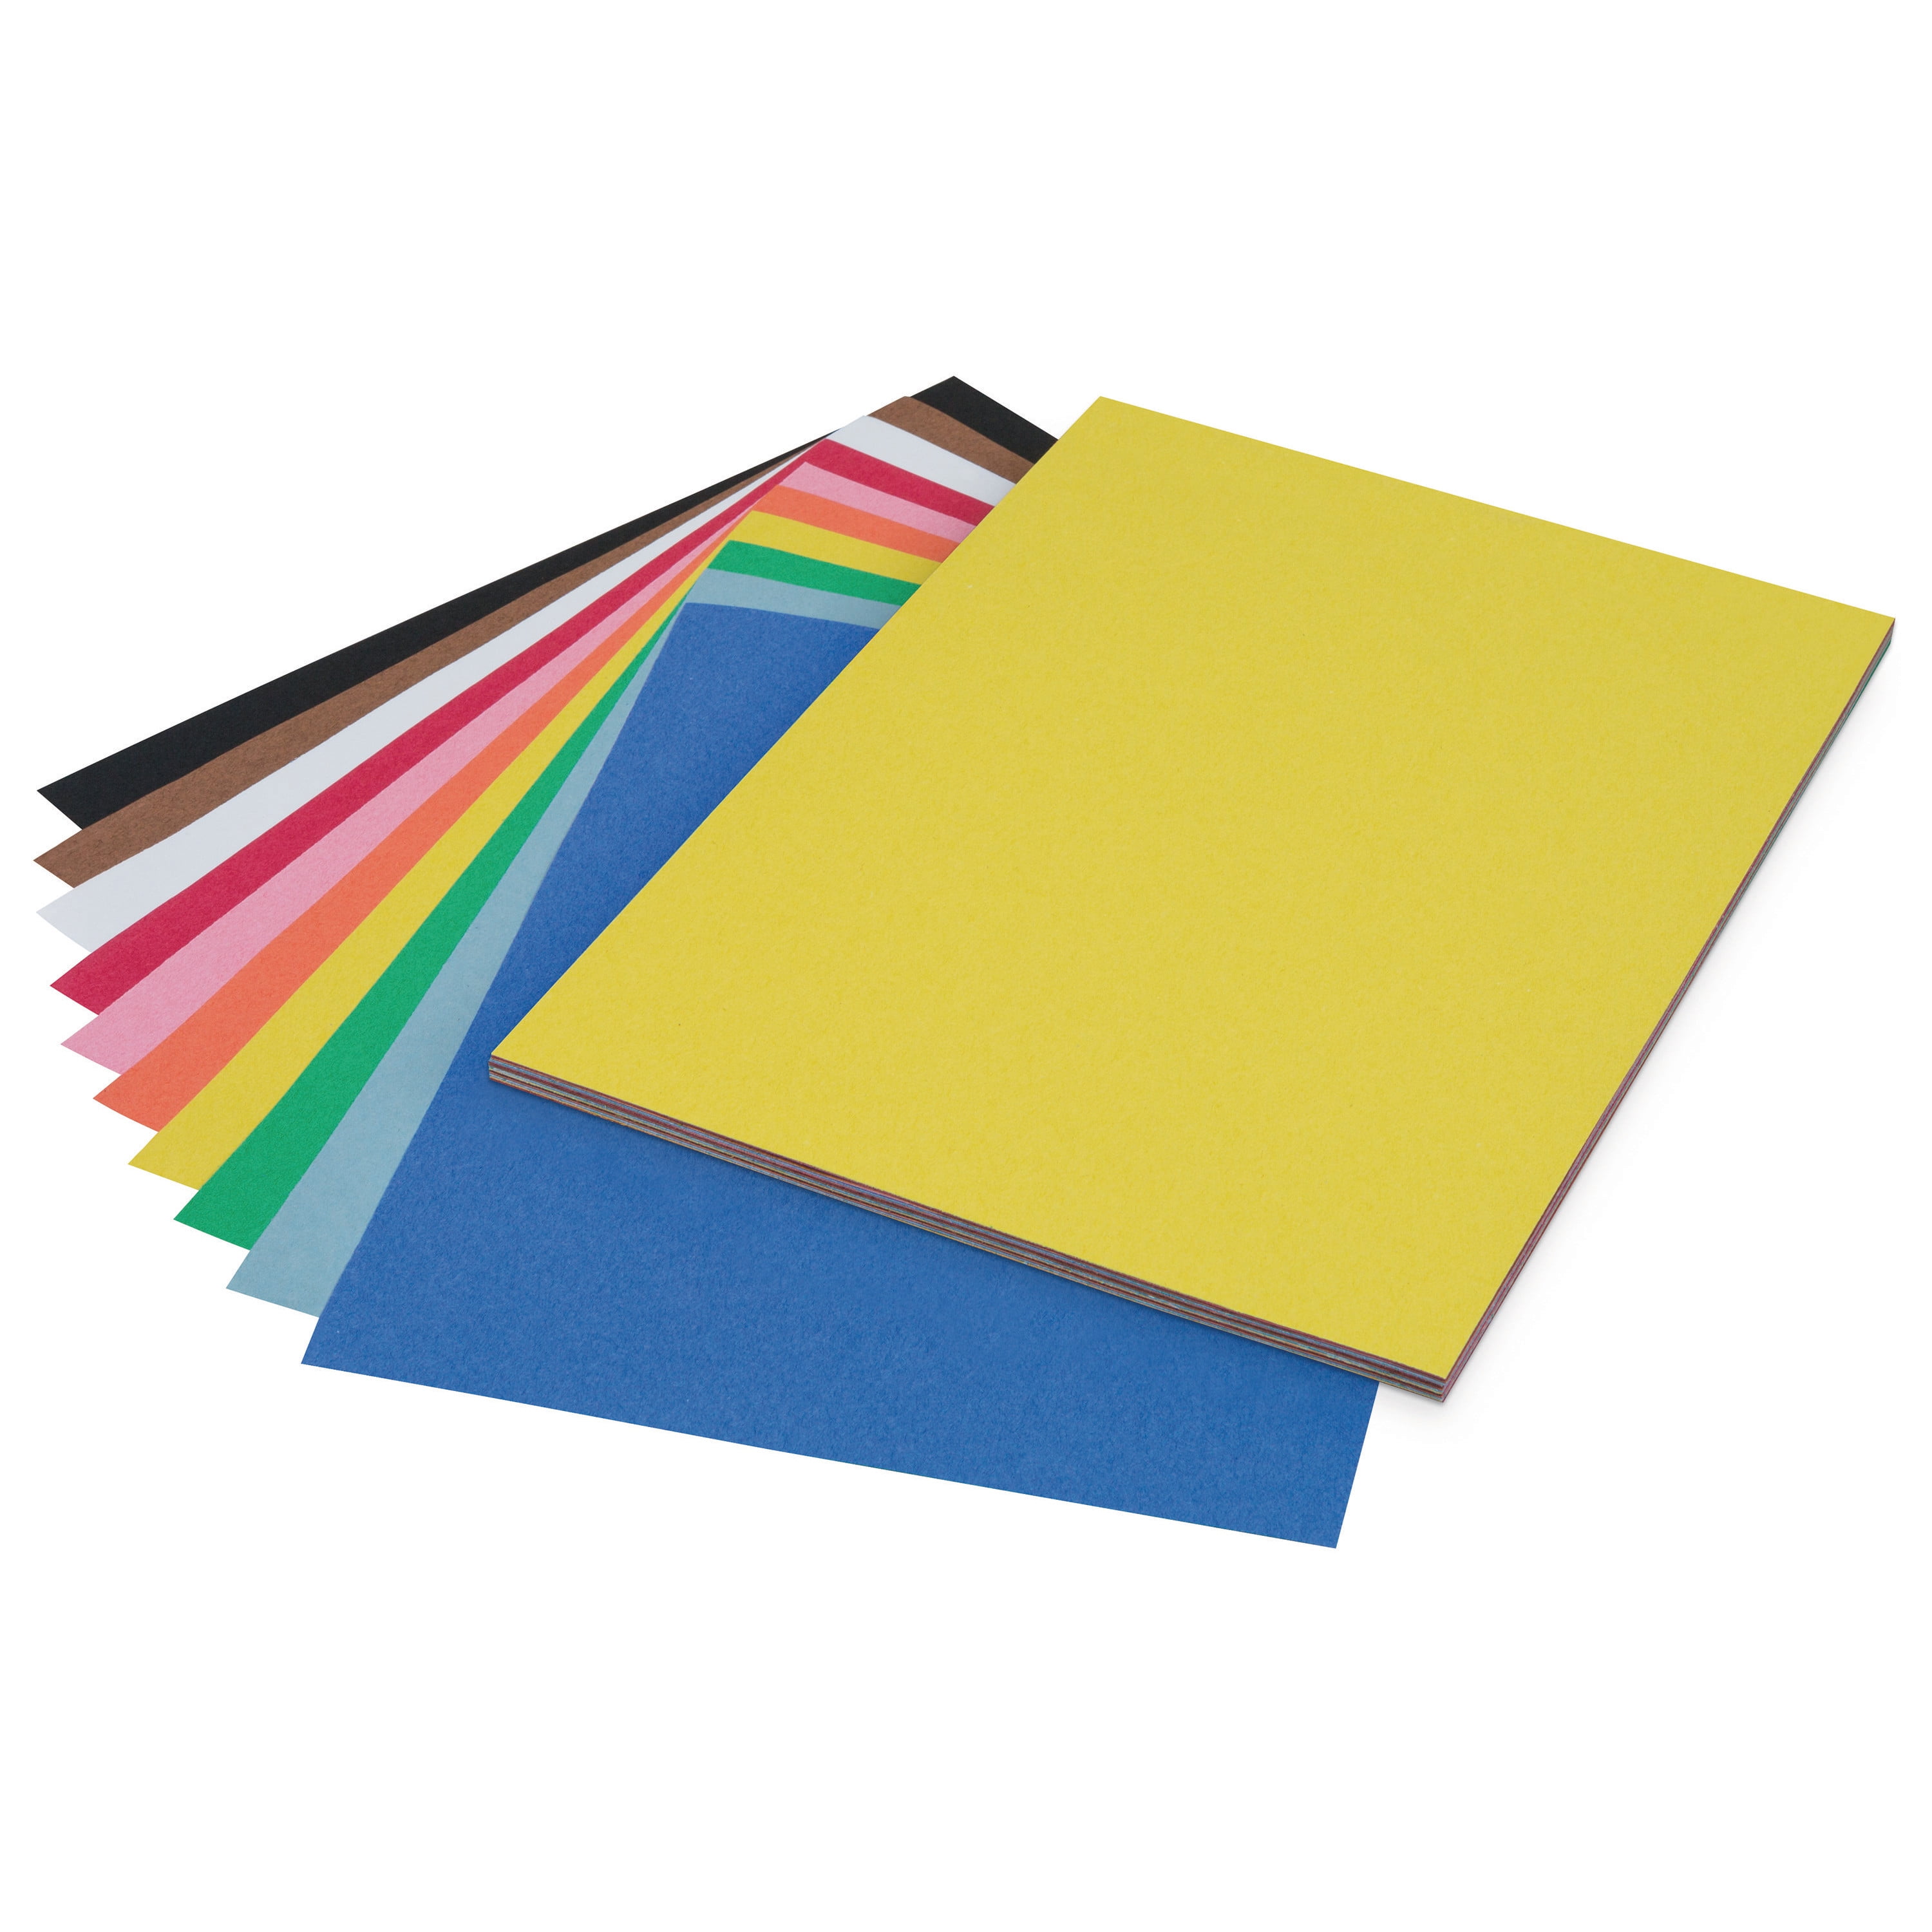 Pacon 3D Riverside Construction Paper, Yellow, 12 x 18, 50 Sheets – Brush  Paper Scissors